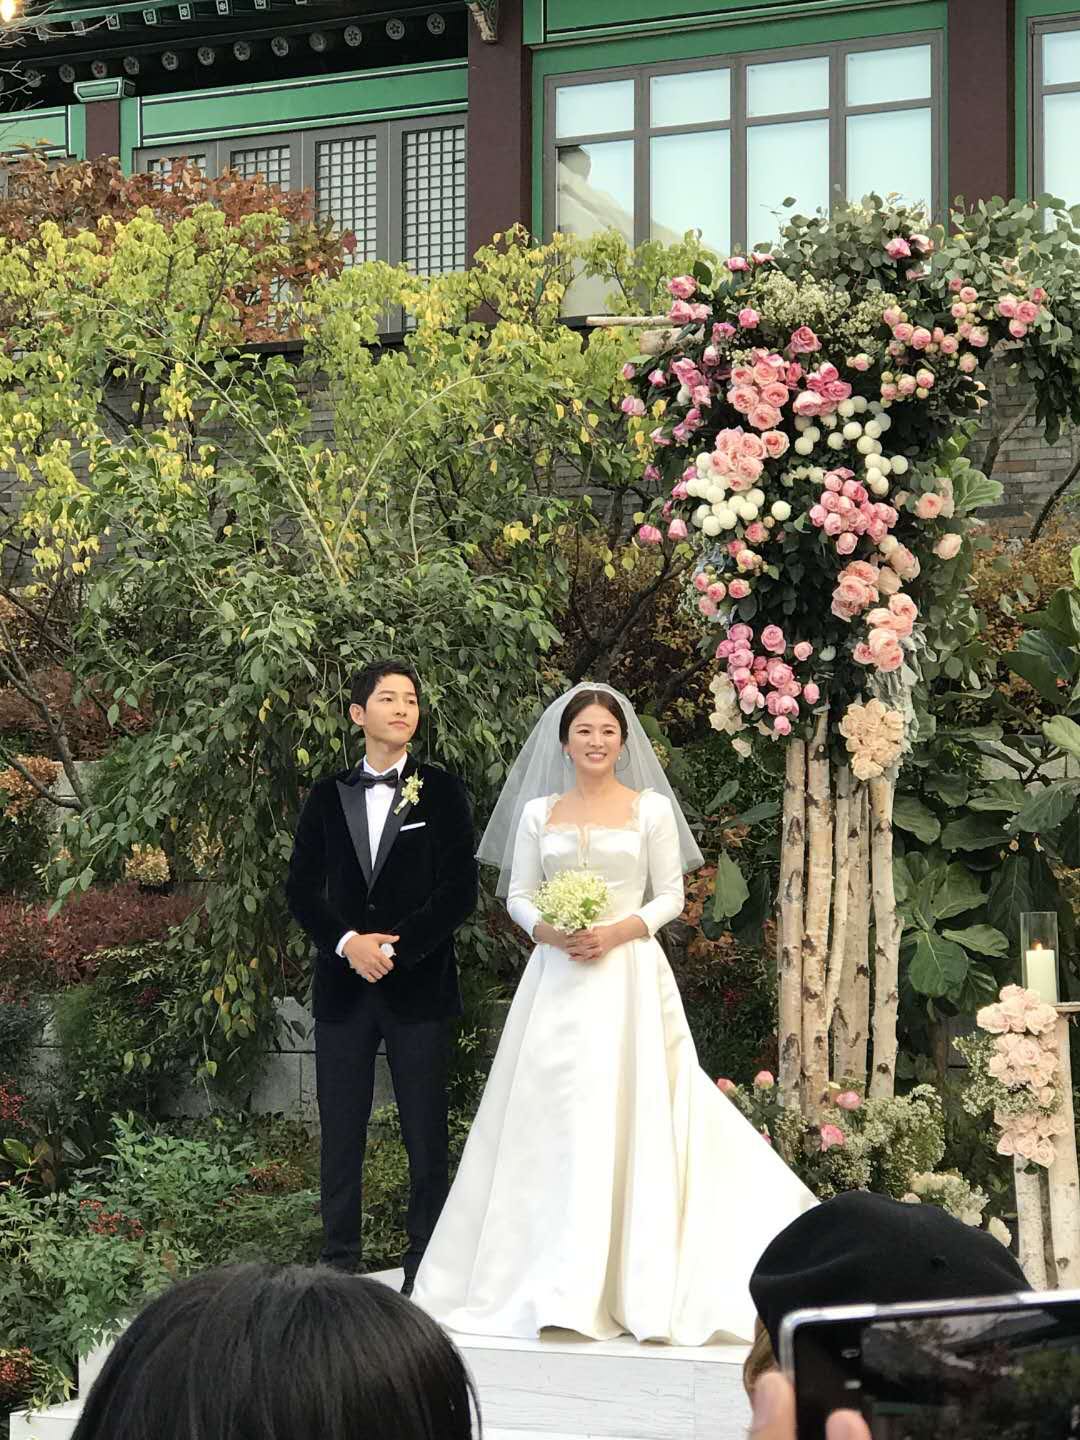 Song Joong Ki wedding